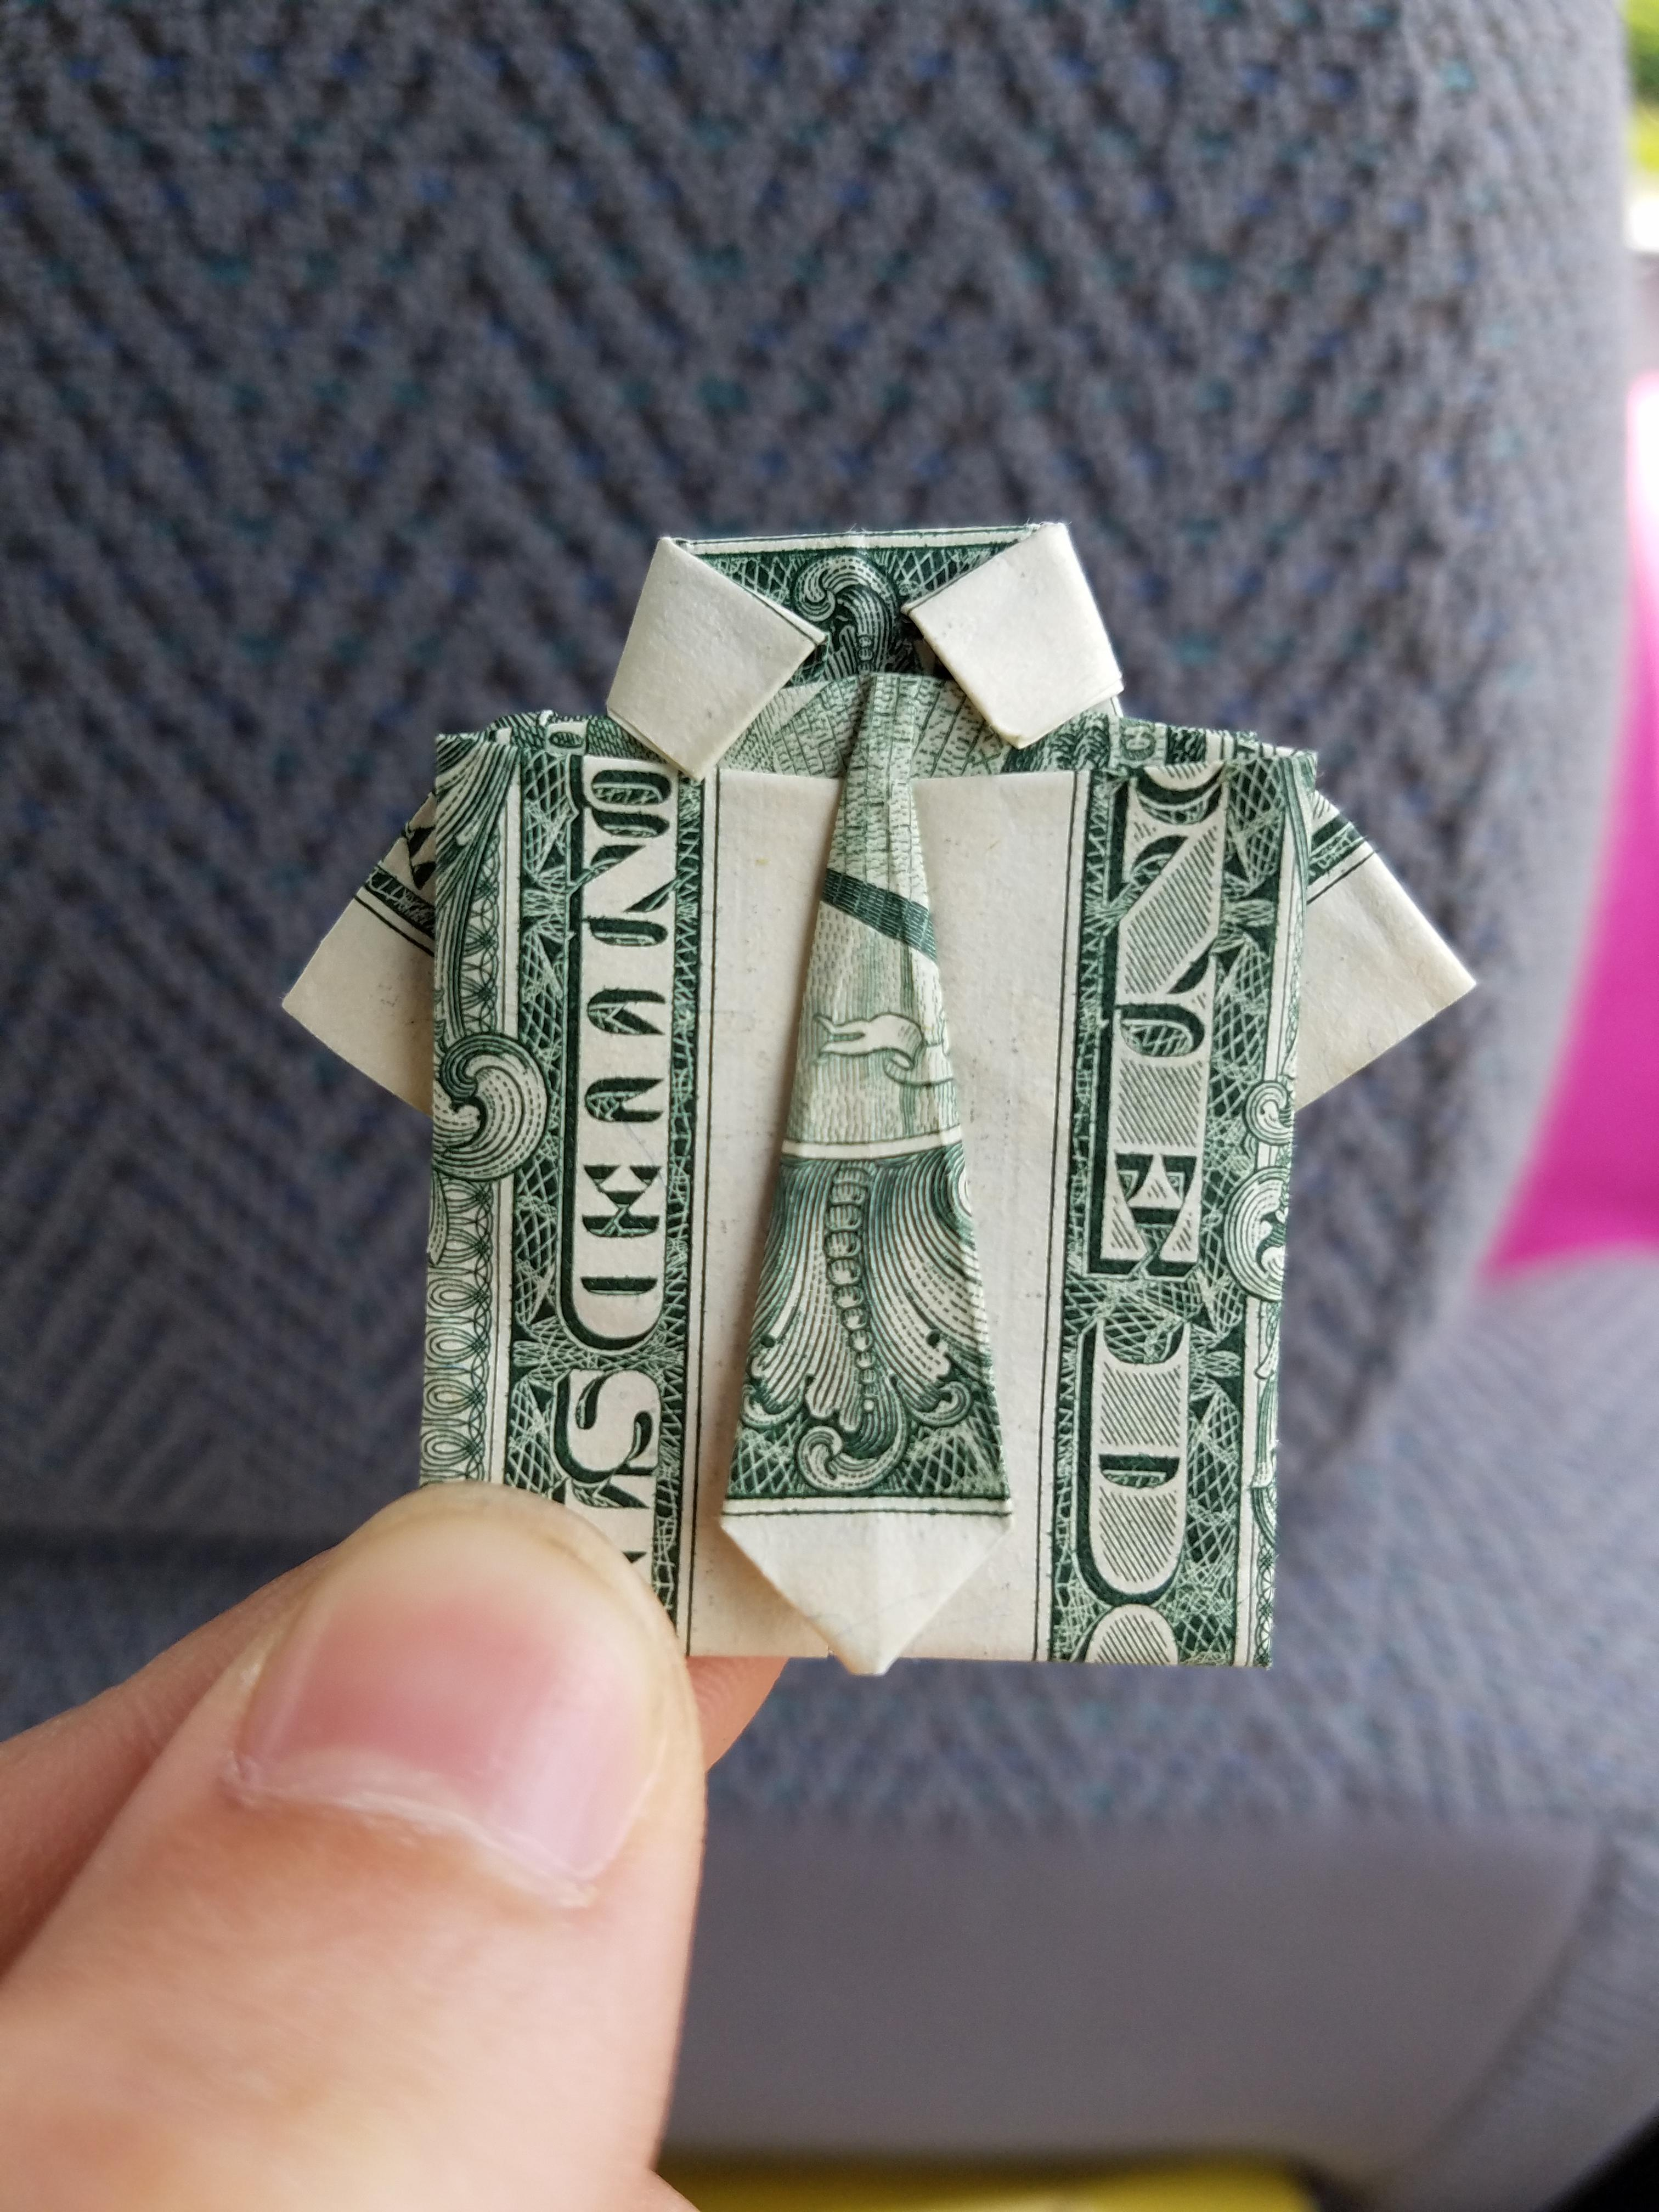 Origami Dollar Bill Shirt With Tie This 1 Dollar Bill Folded Like A Shirt And Tie Mildlyinteresting